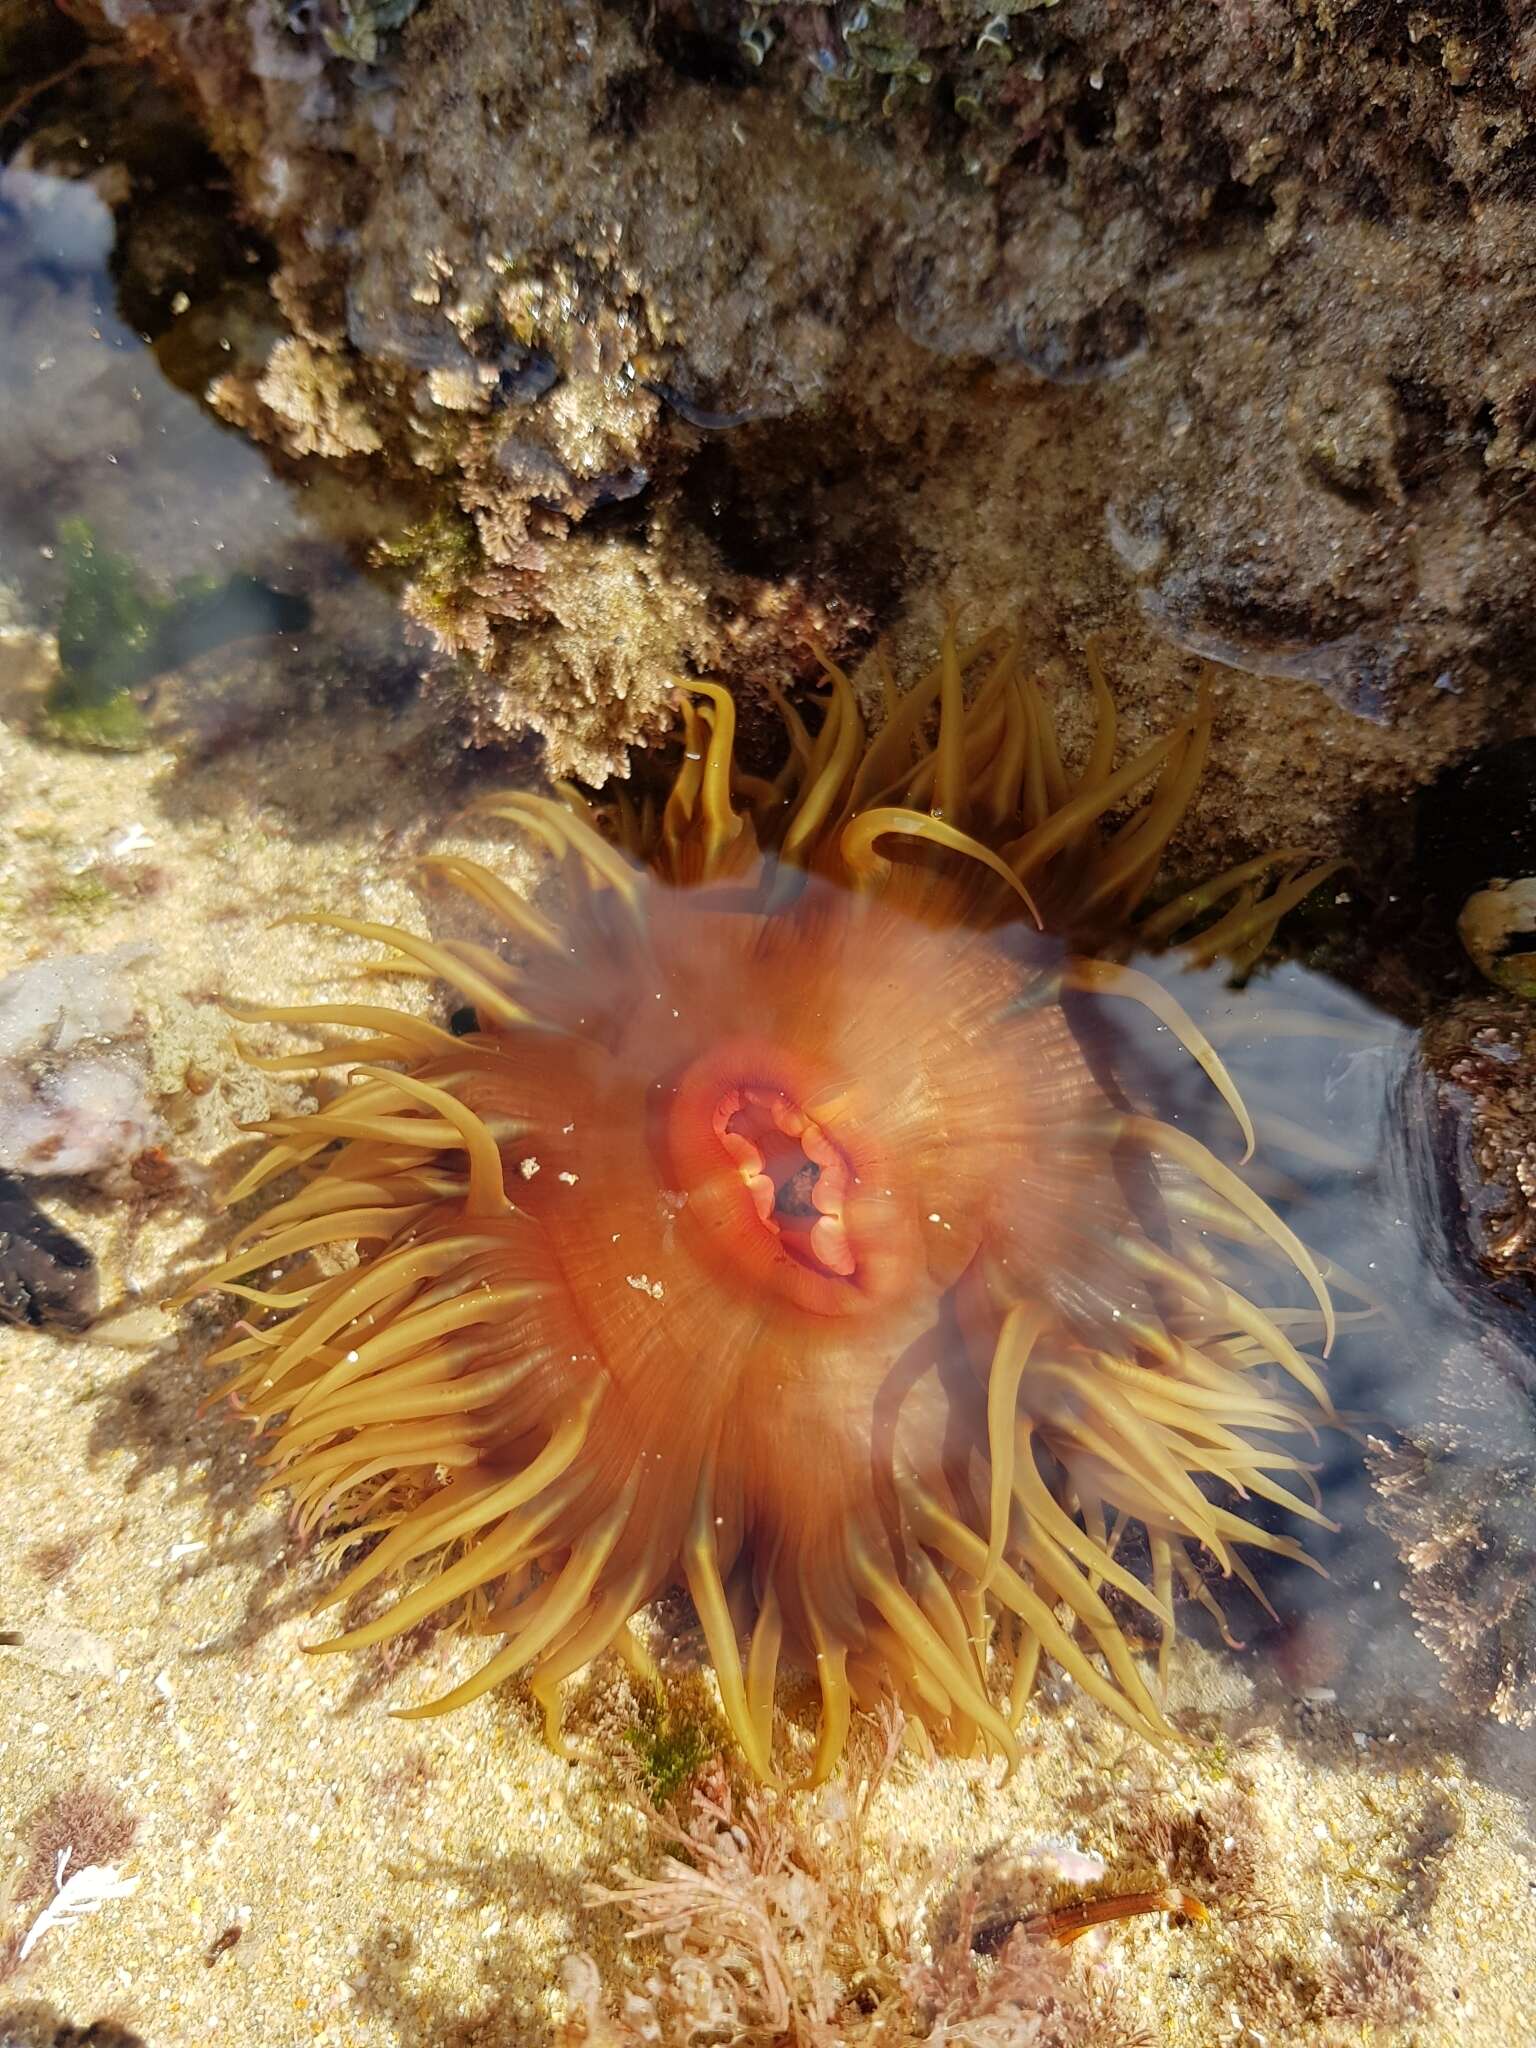 Image of False plum anemone